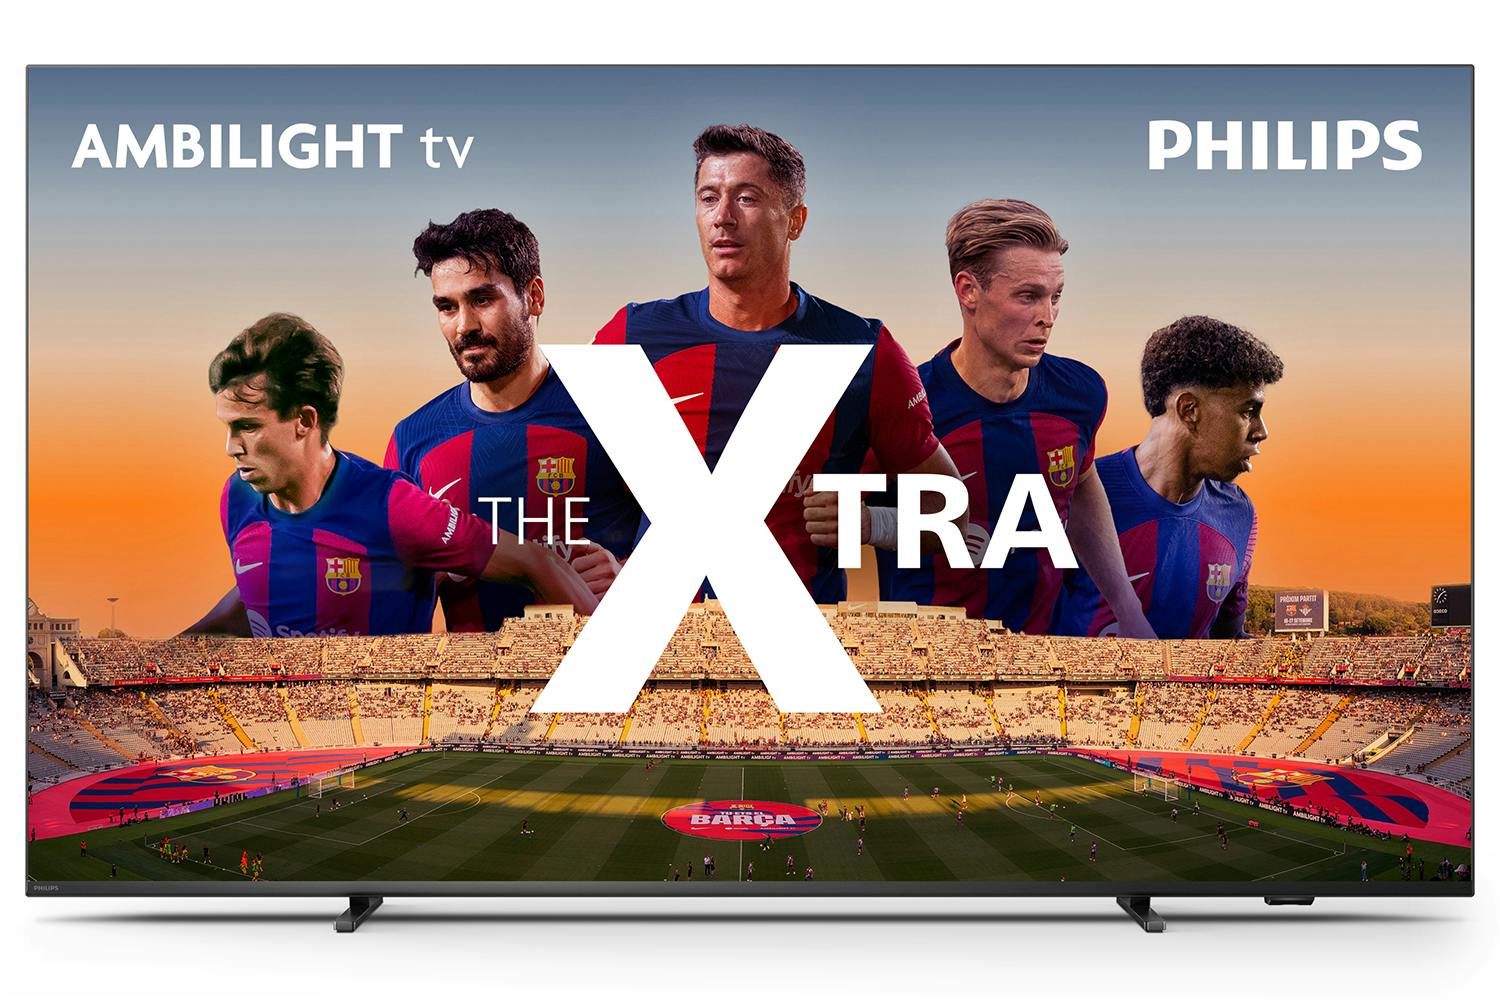 Should I buy a Philips Ambilight TV?